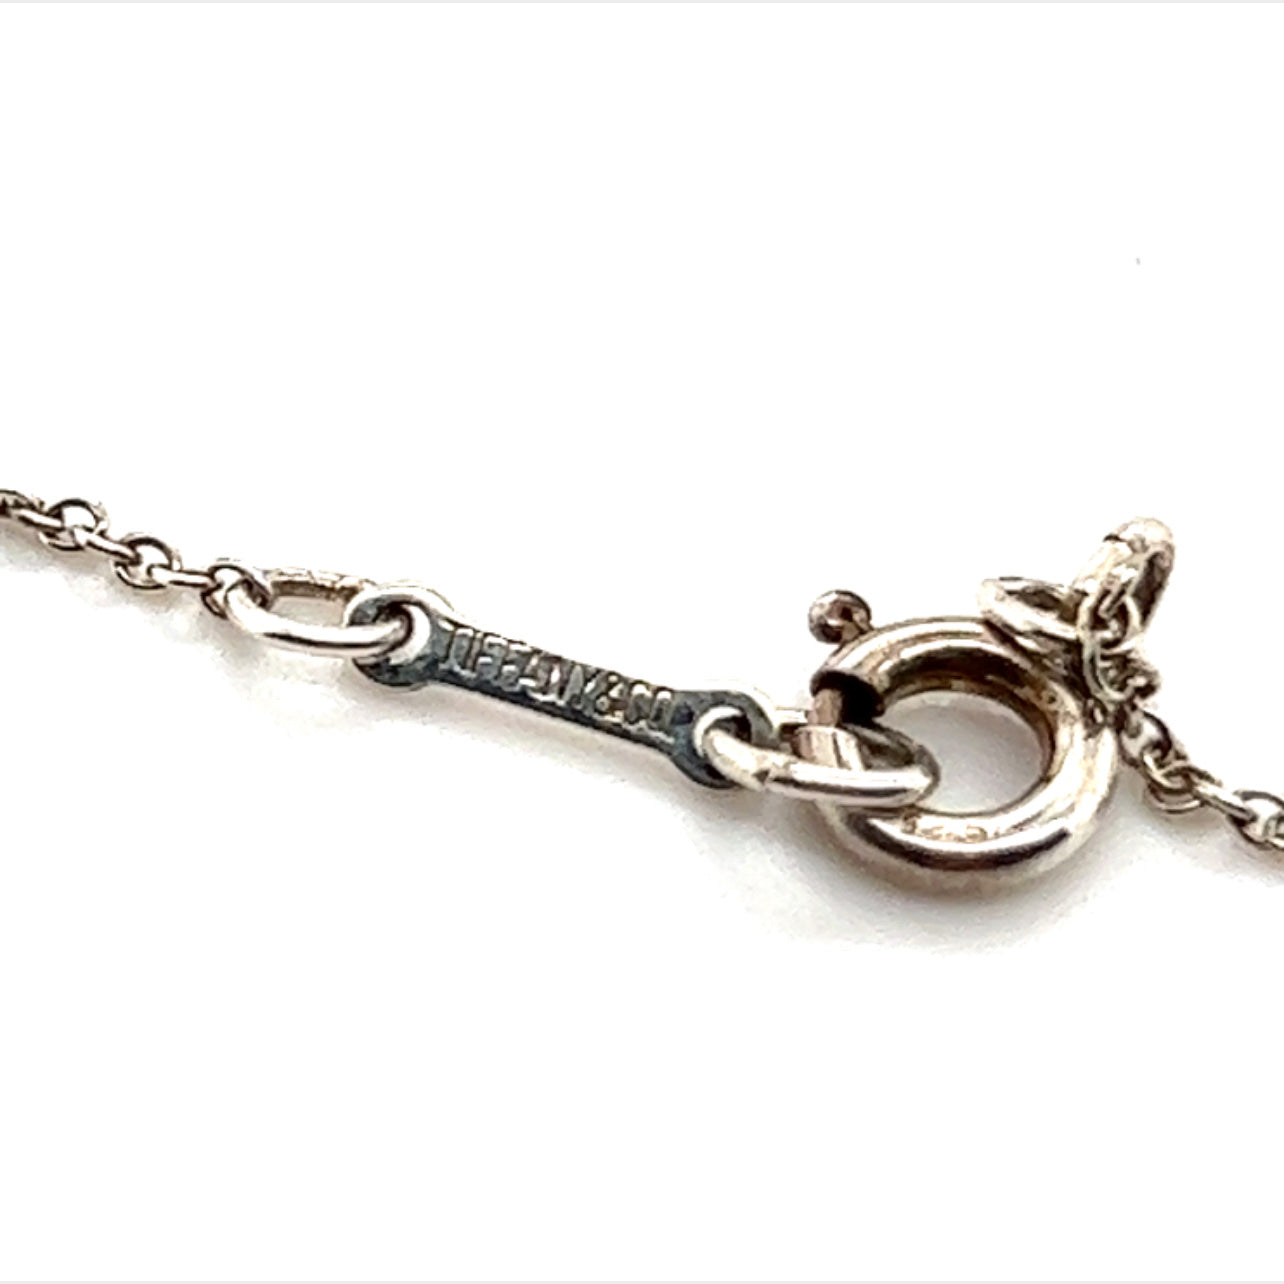 Tiffany & Co Estate Tear Drop Pendant Silver Necklace 17" By Elsa Peretti TIF228 - Certified Fine Jewelry